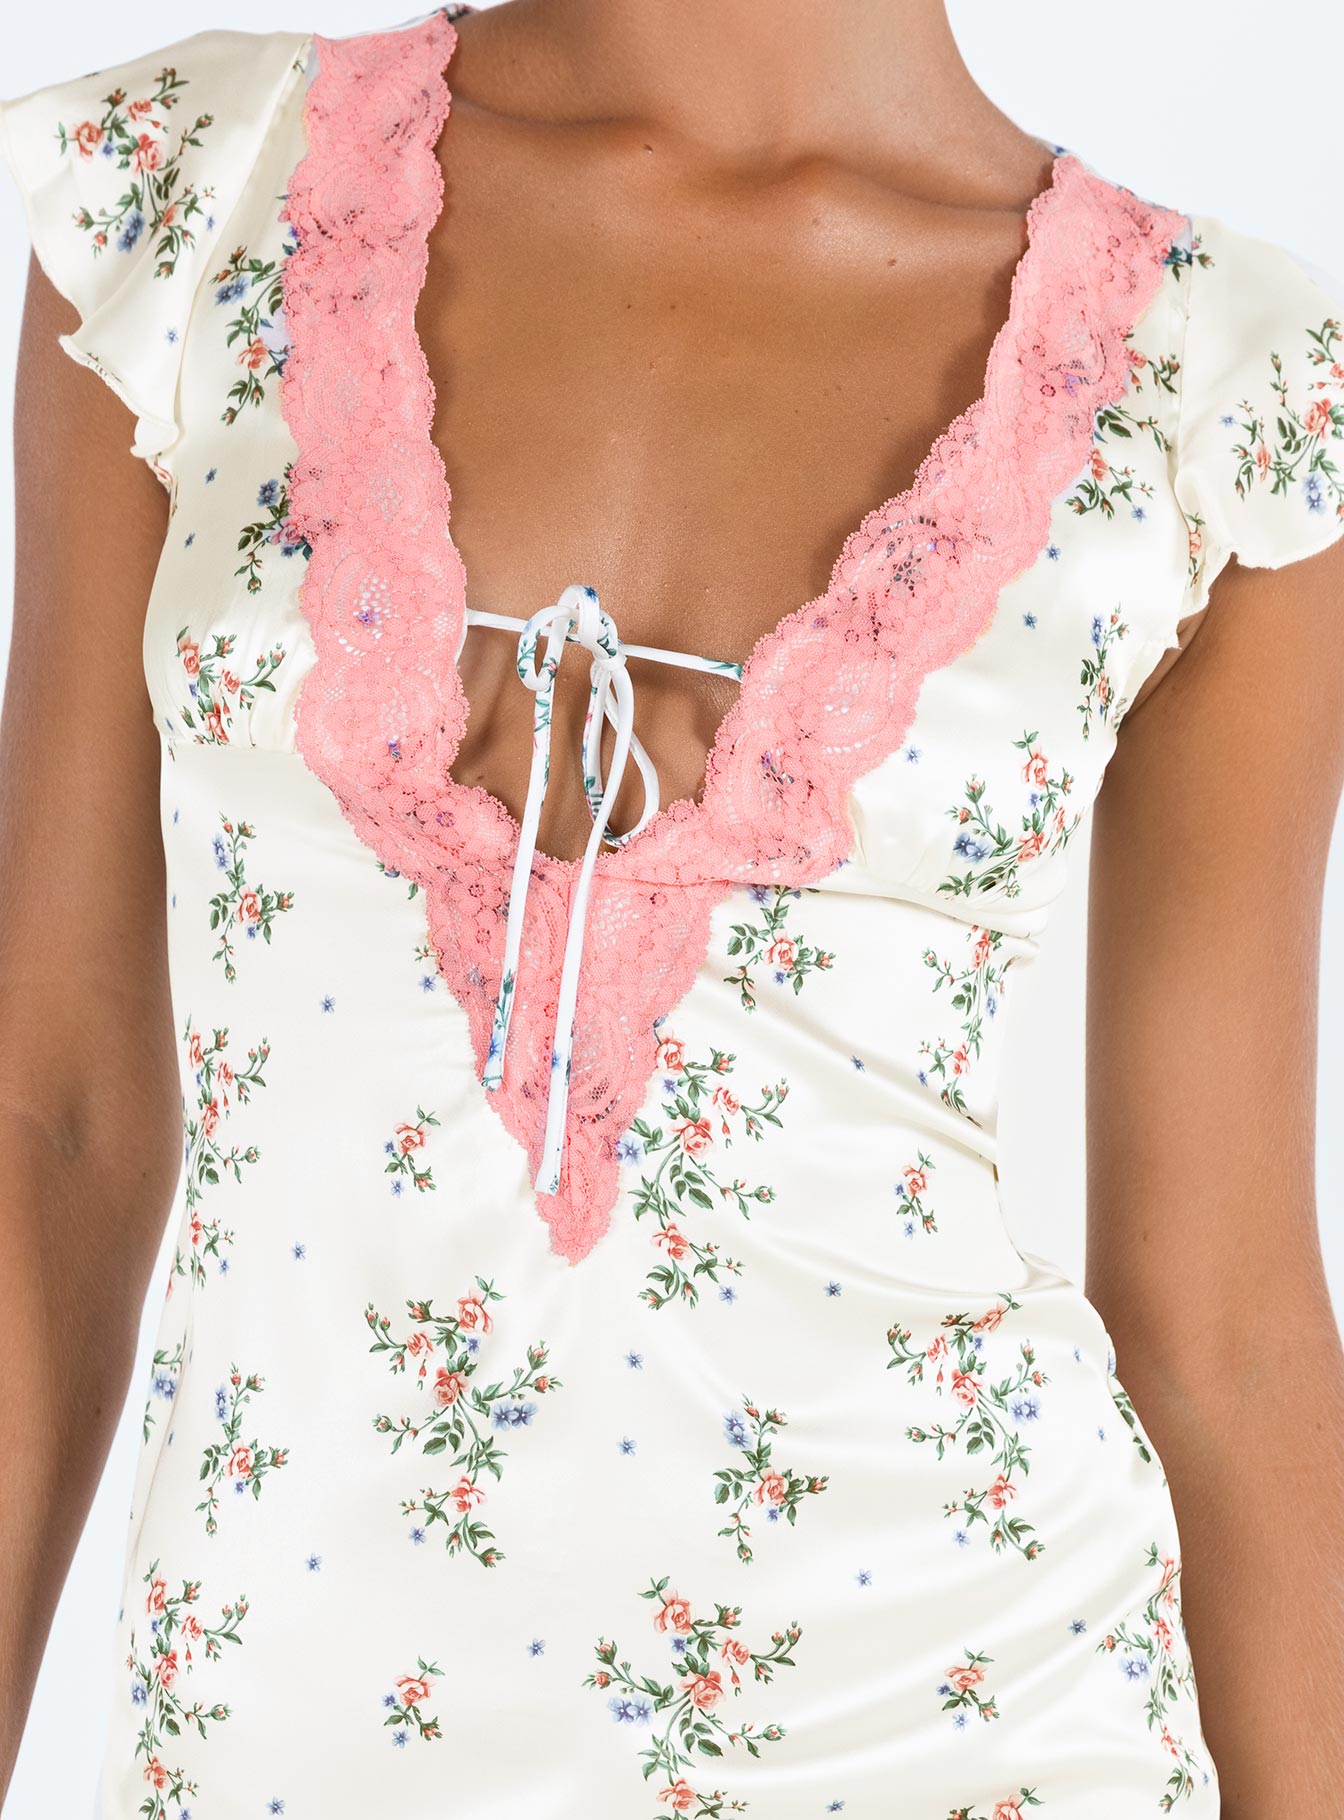 Genrovia - Lace-Trim Floral Print Camisole Crop Top